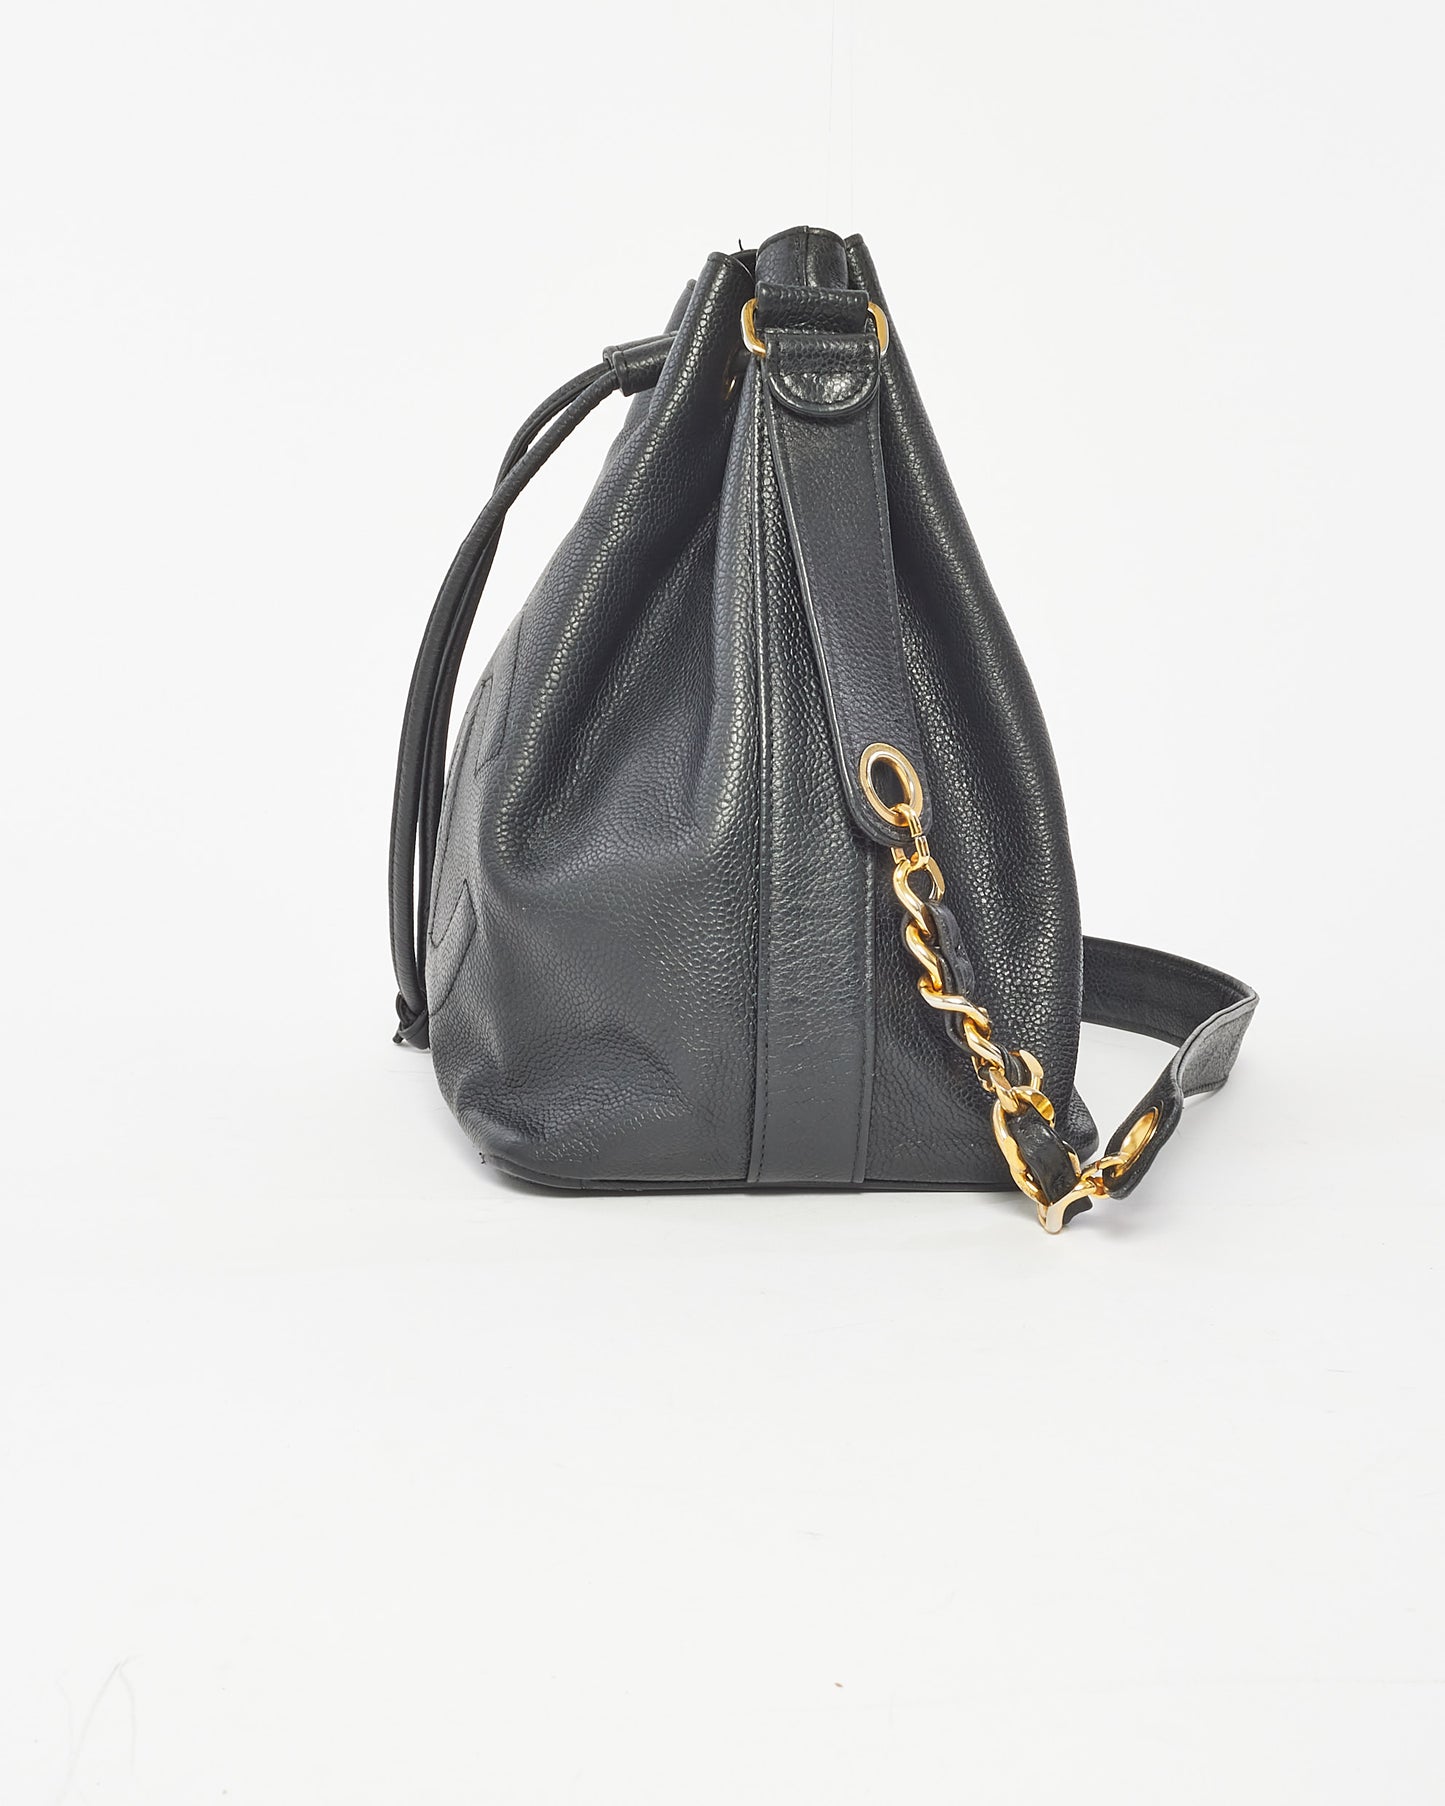 Chanel Black Leather CC Logo Drawstring Bucket Bag